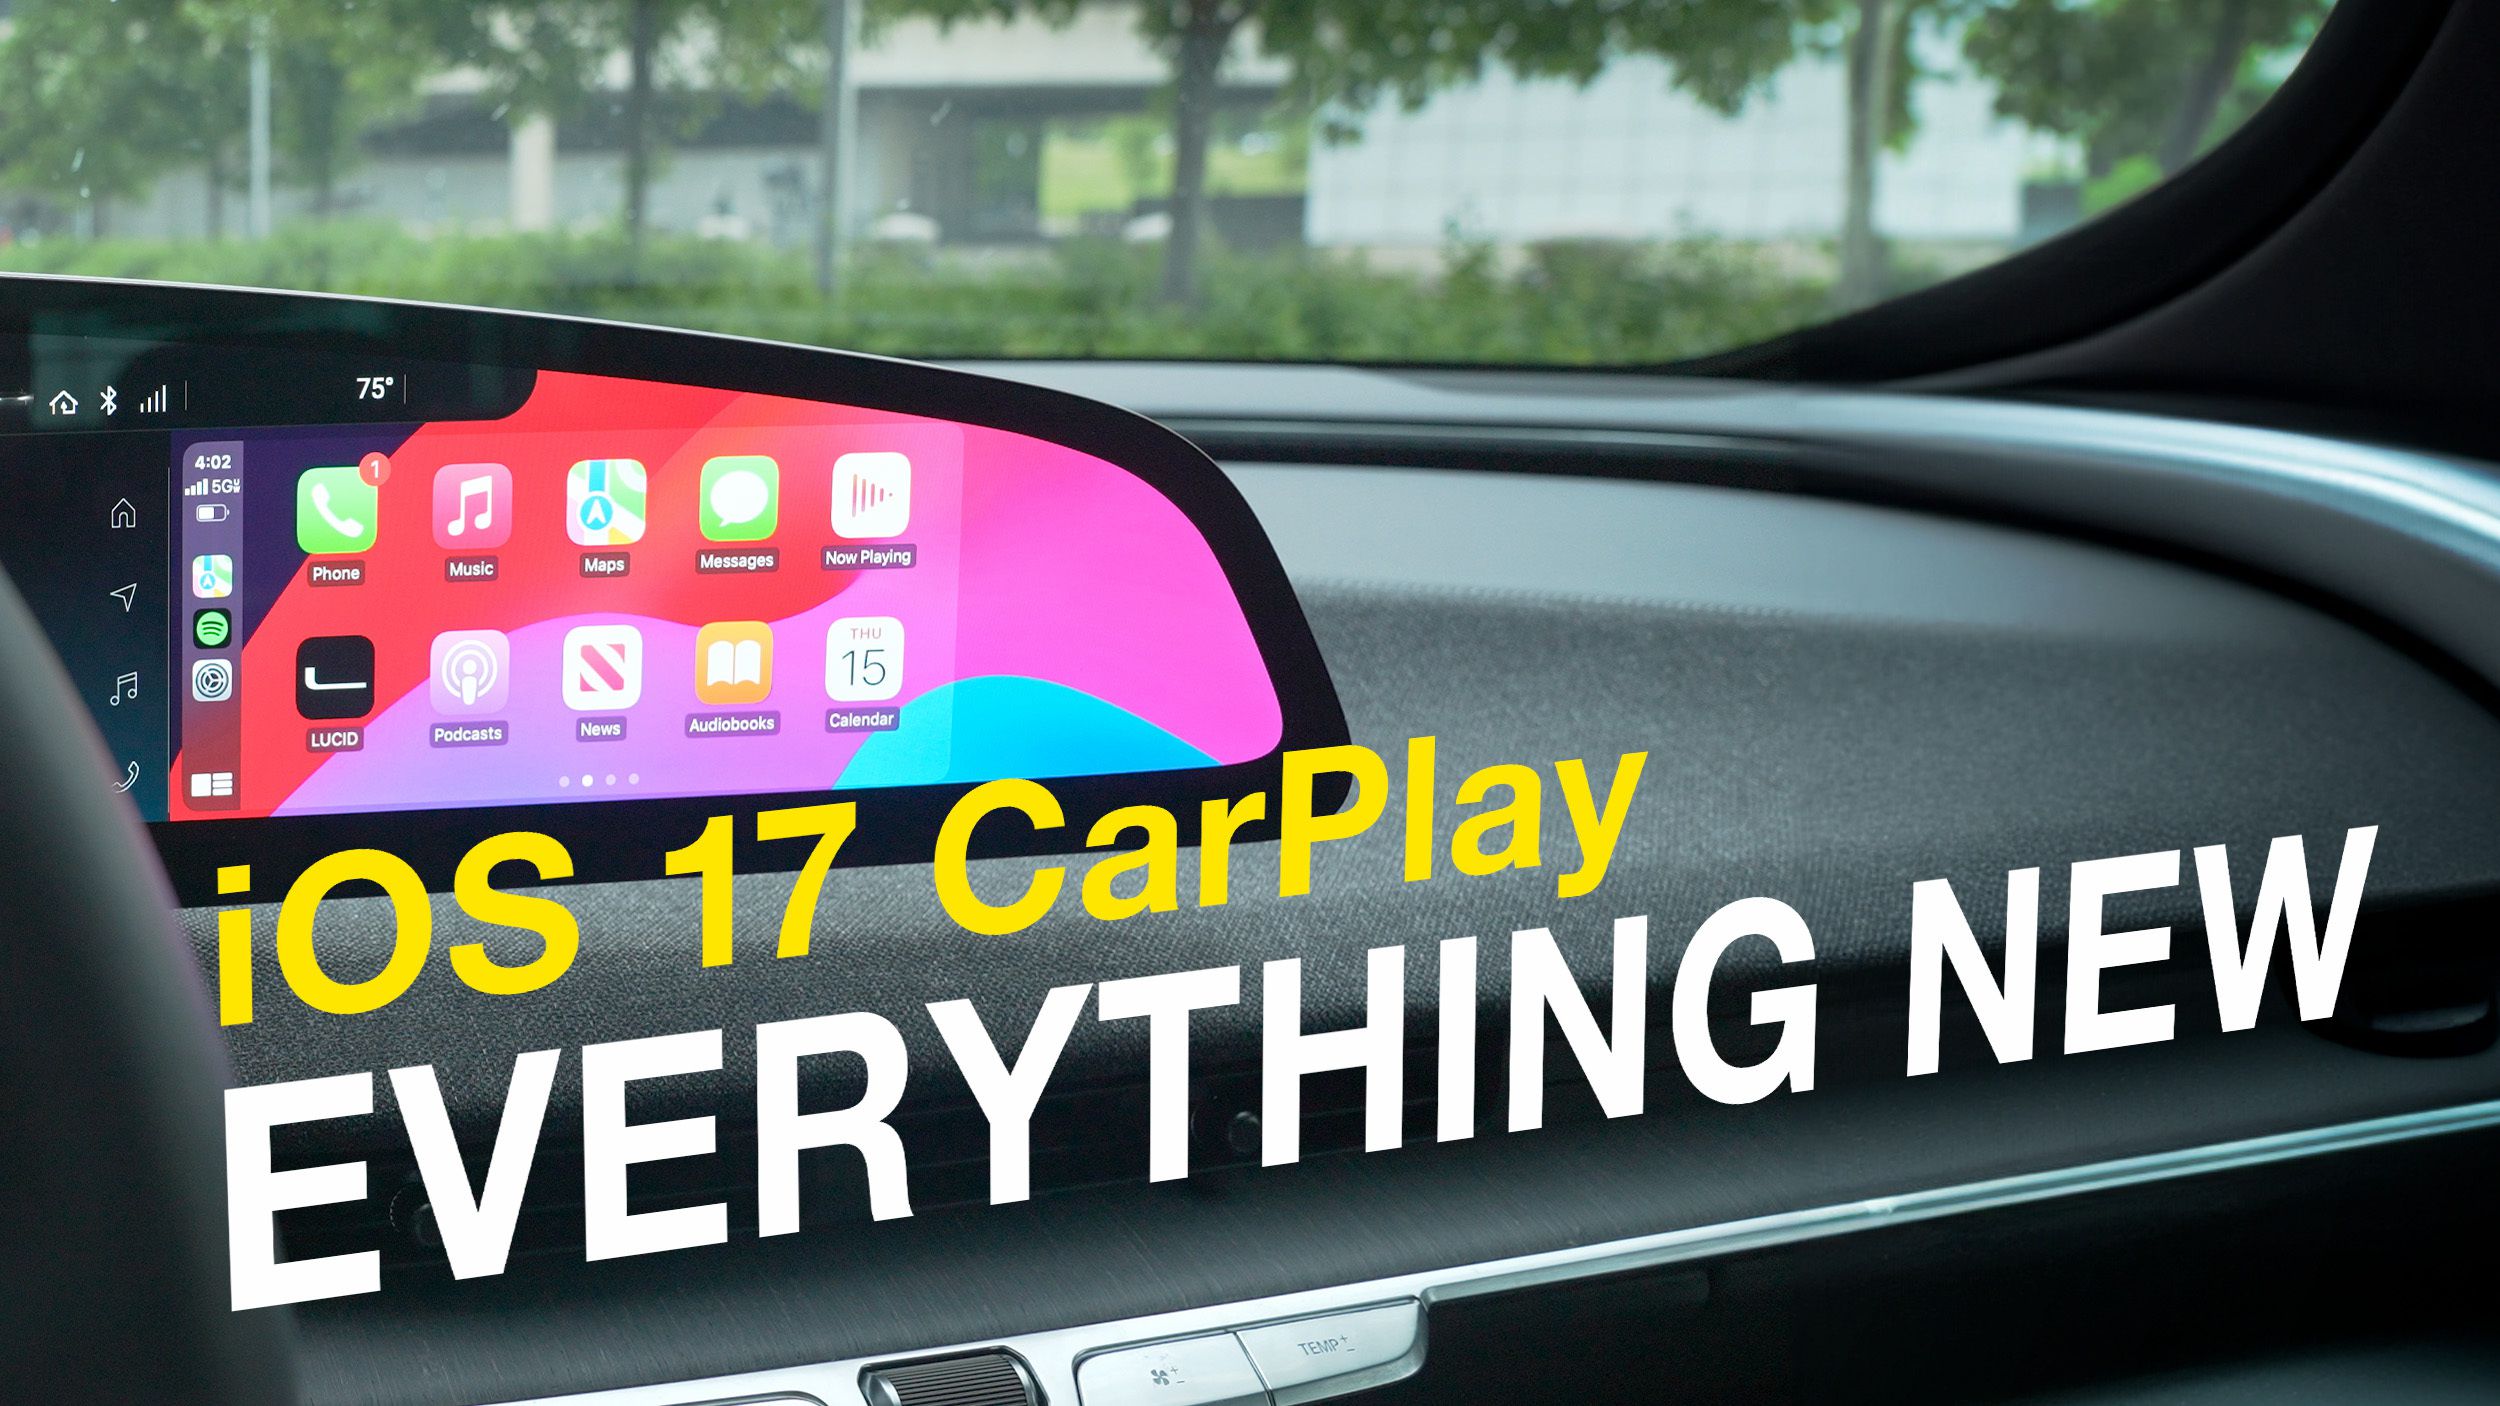 https://images.macrumors.com/t/gxiBYpls1C2Bh5qdjL8uotD8-jE=/2500x/article-new/2023/06/CarPlay-iOS-17-Everything-New-Thumb.jpg